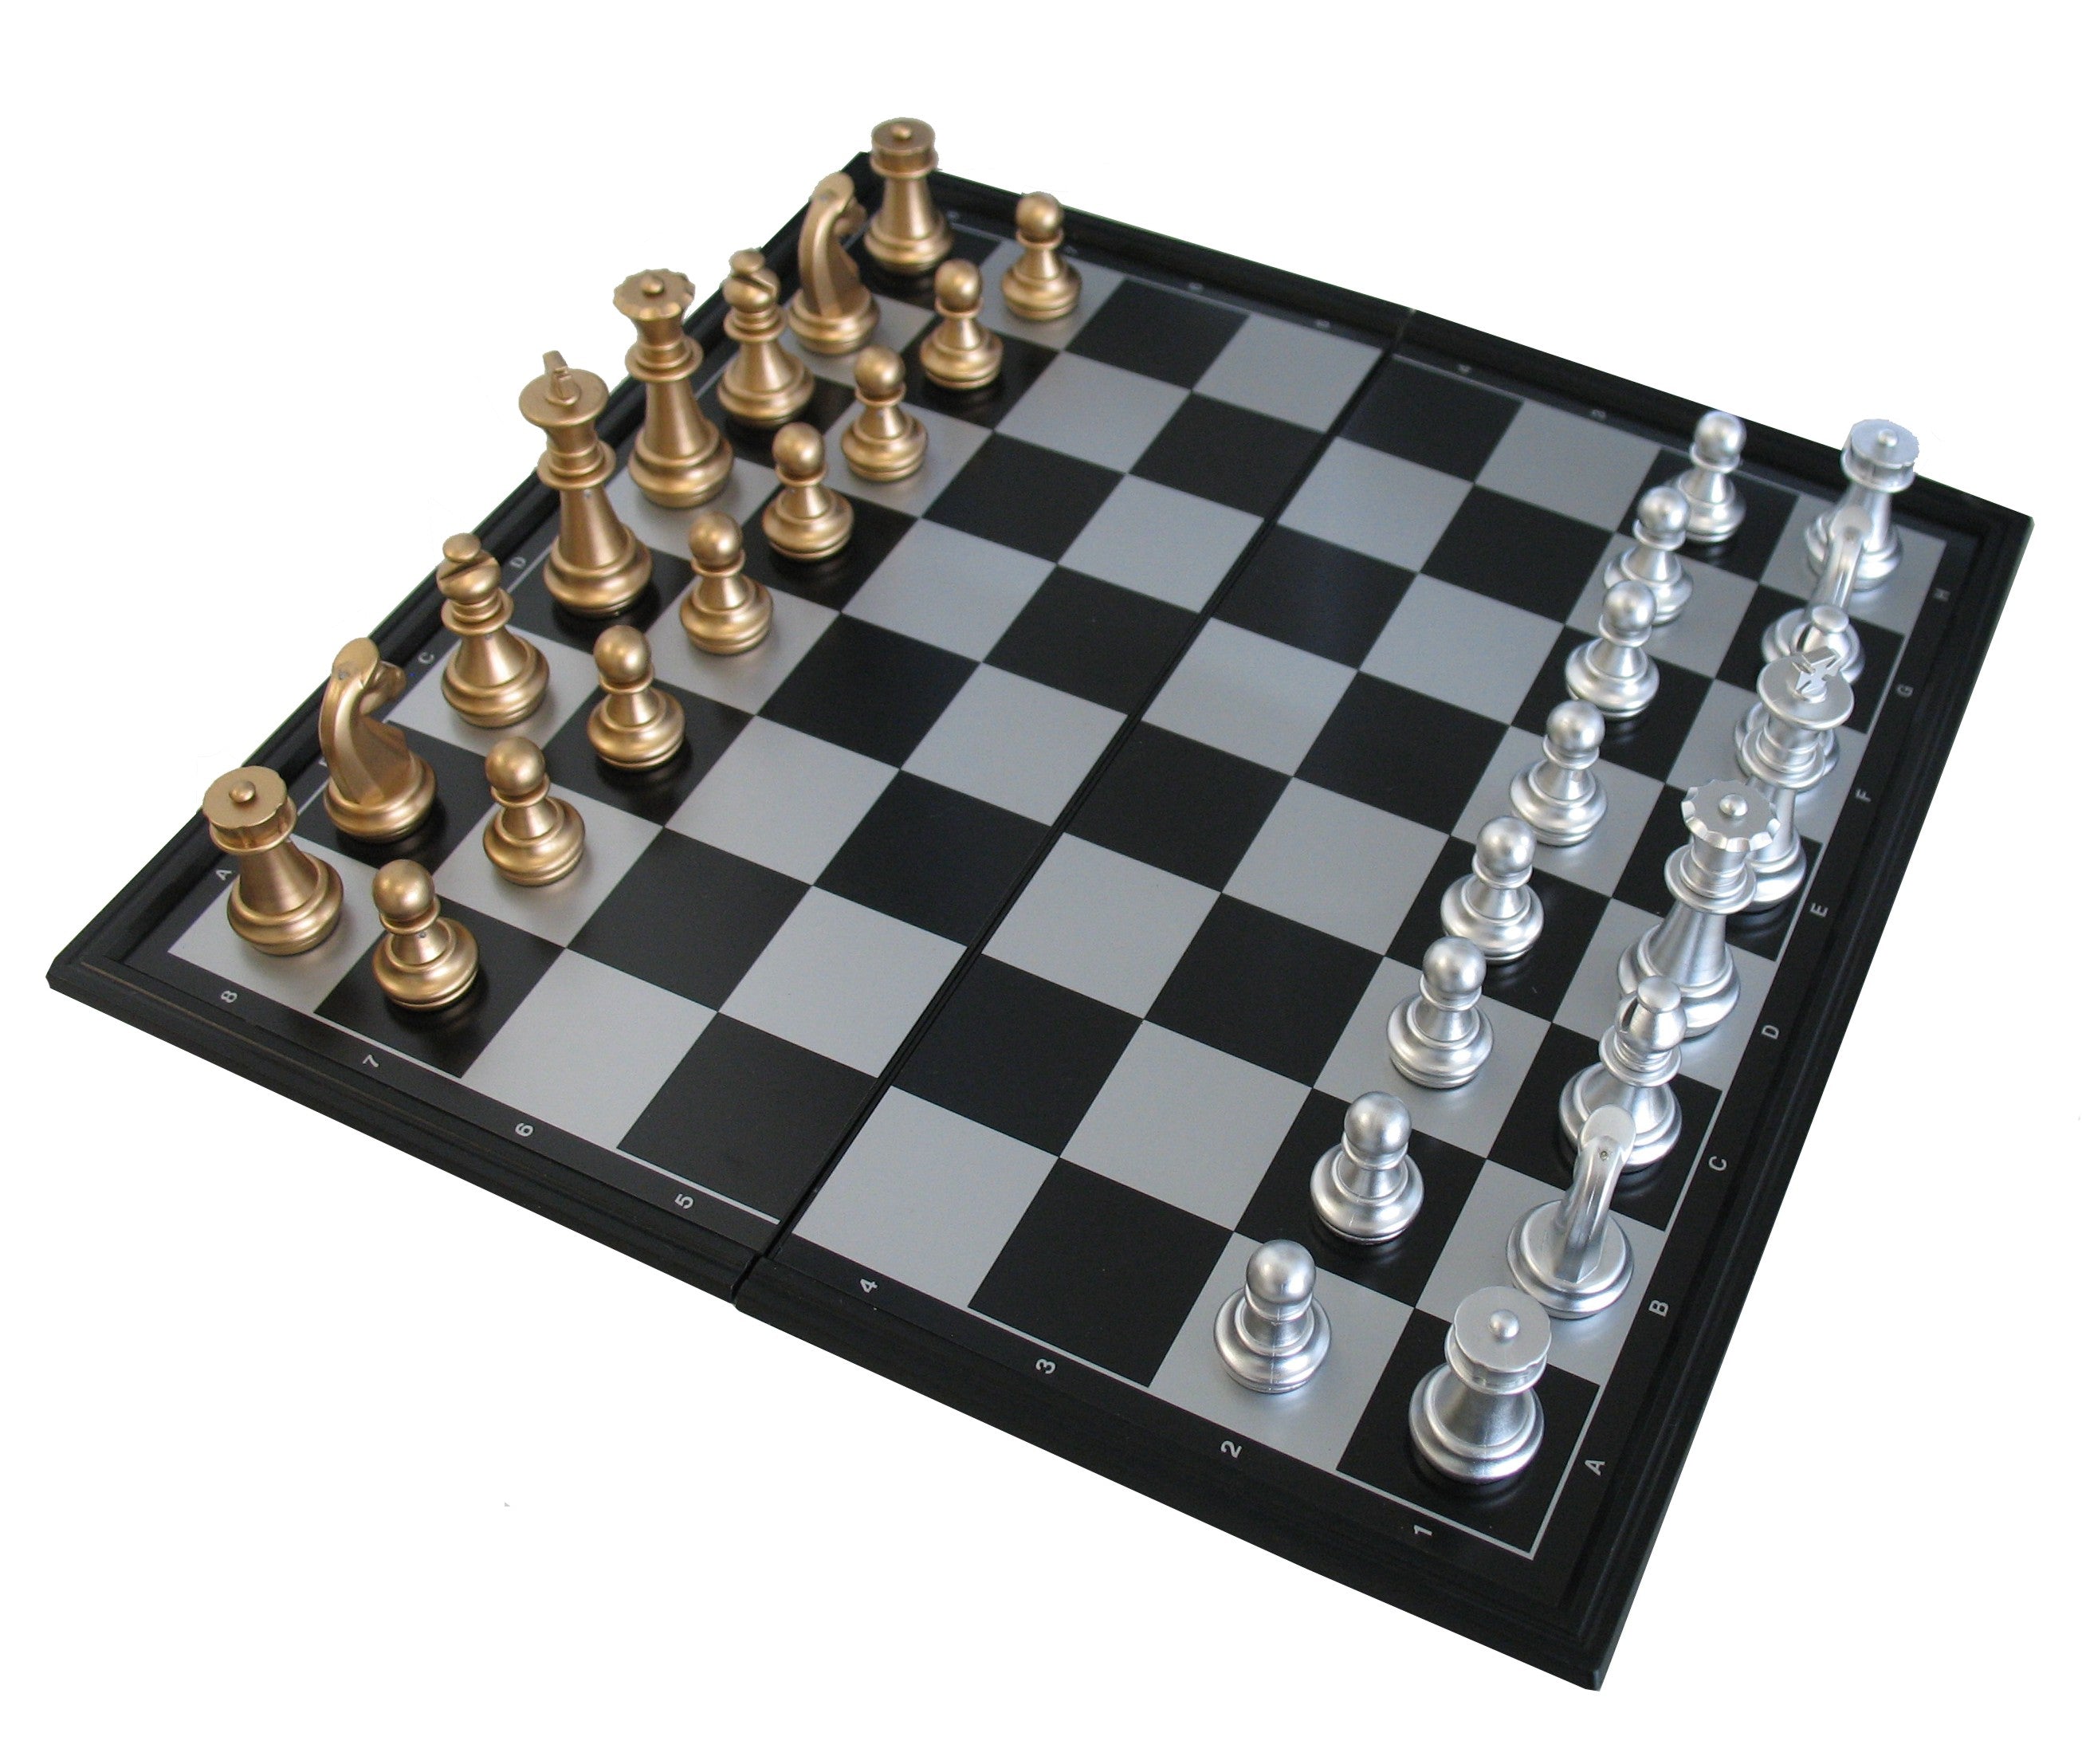 Chess box black/gold plastic magnetic